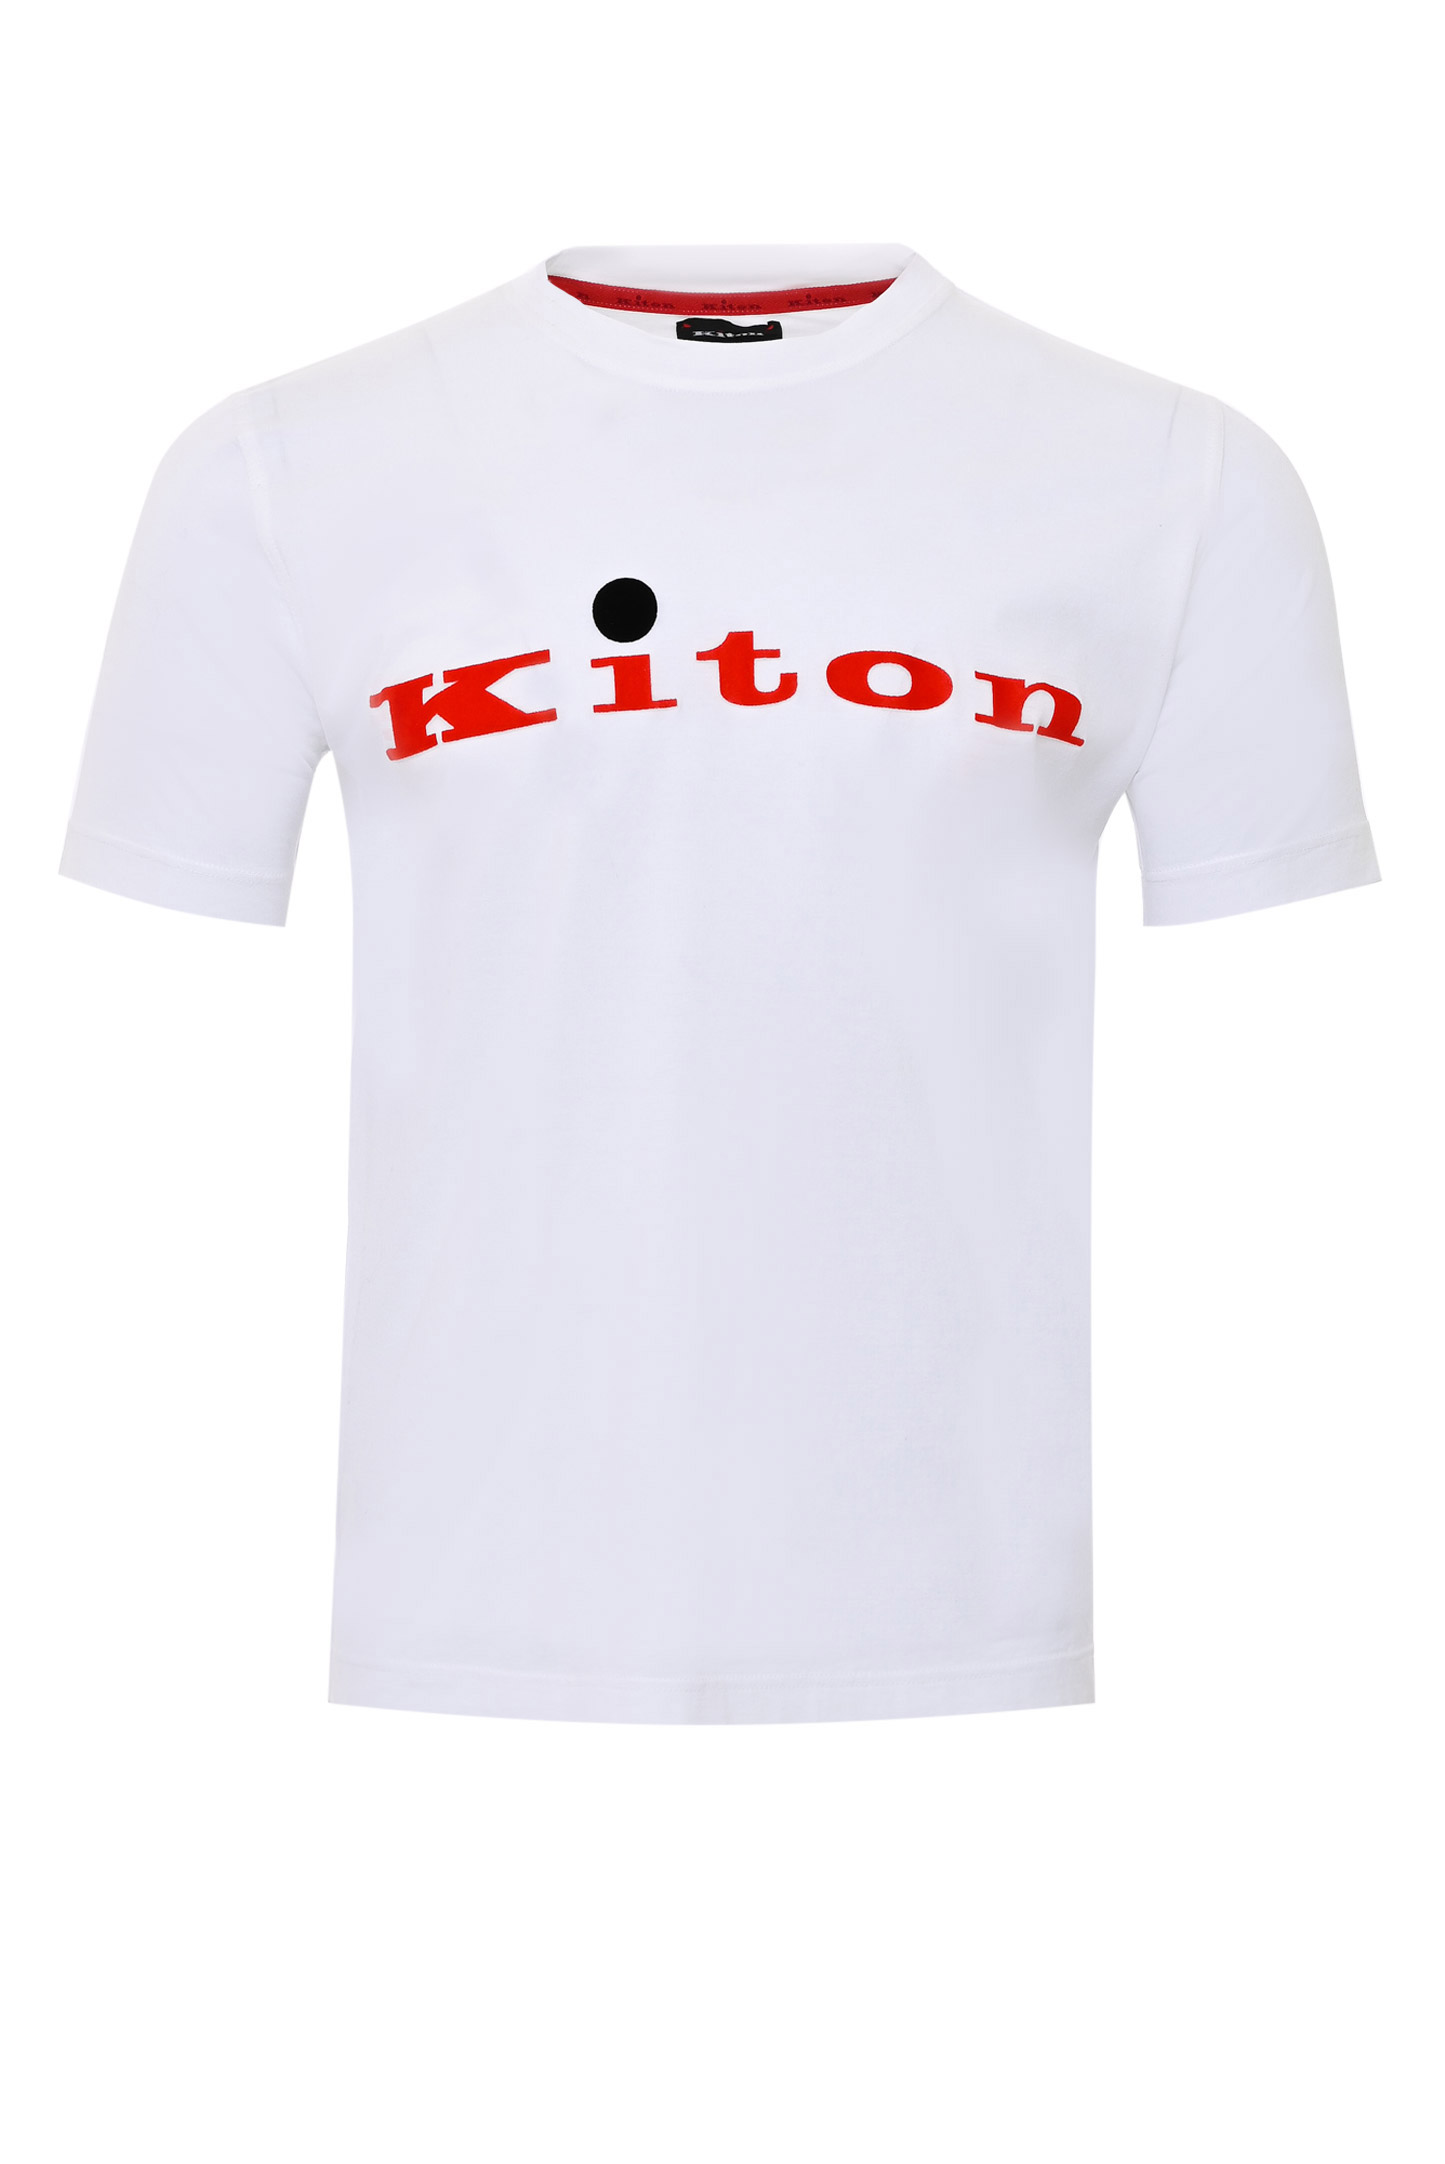 Футболка KITON UK1164W21, цвет: Белый, Мужской